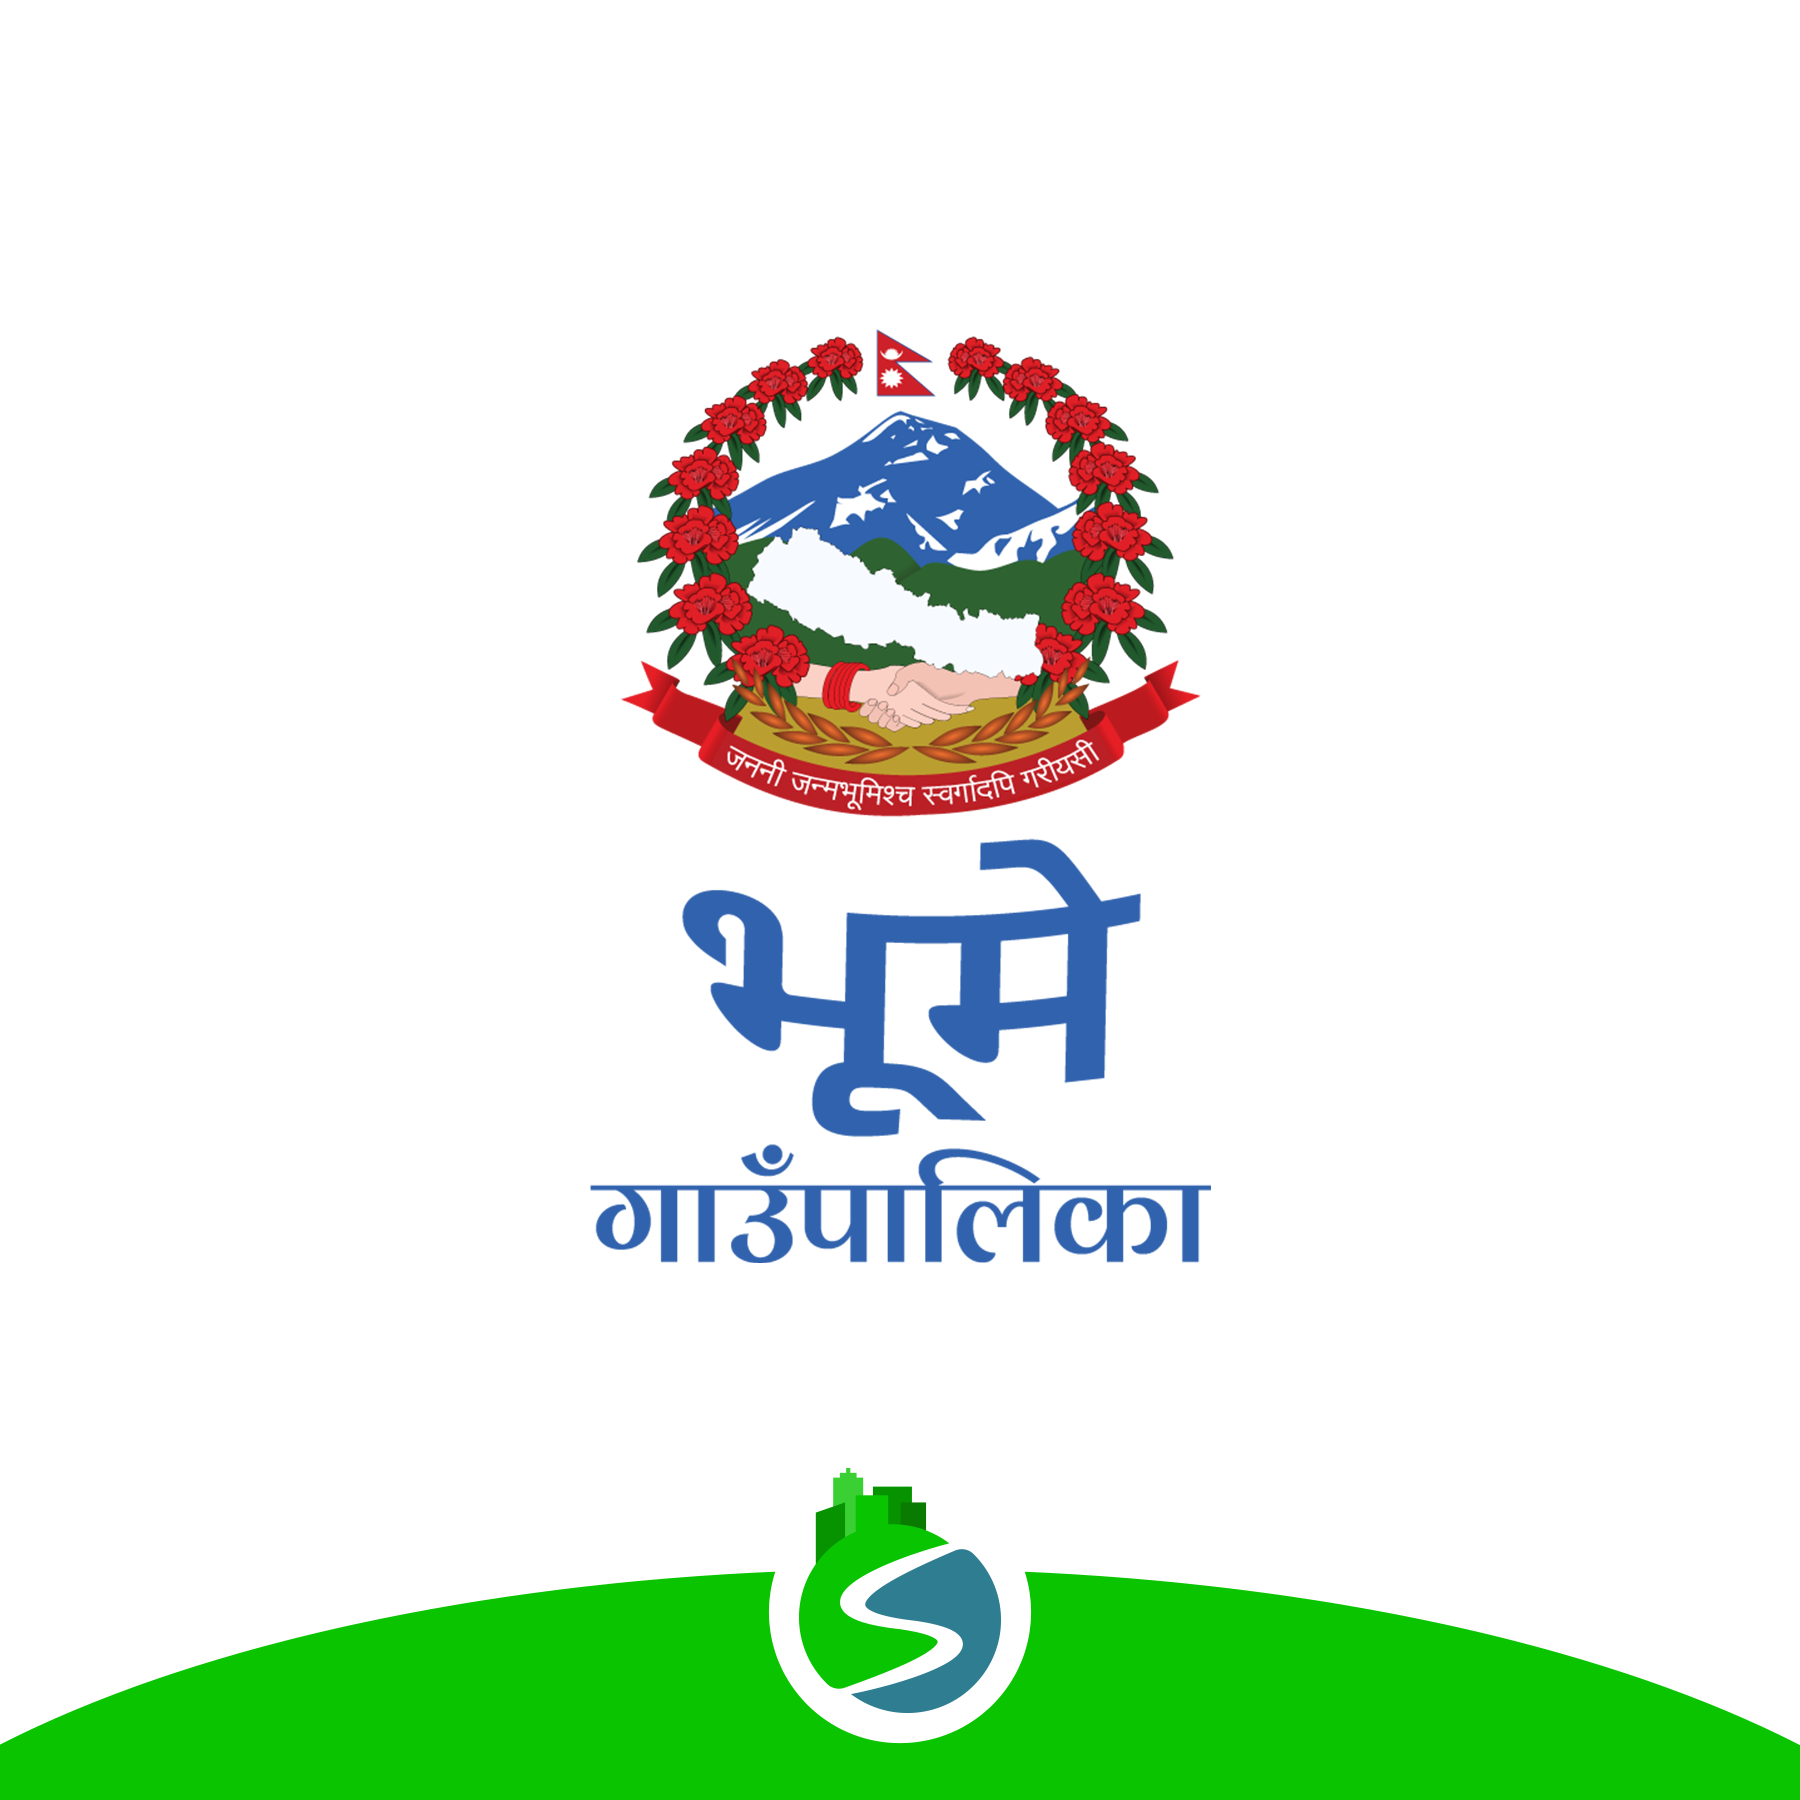 Bhume Municipality logo